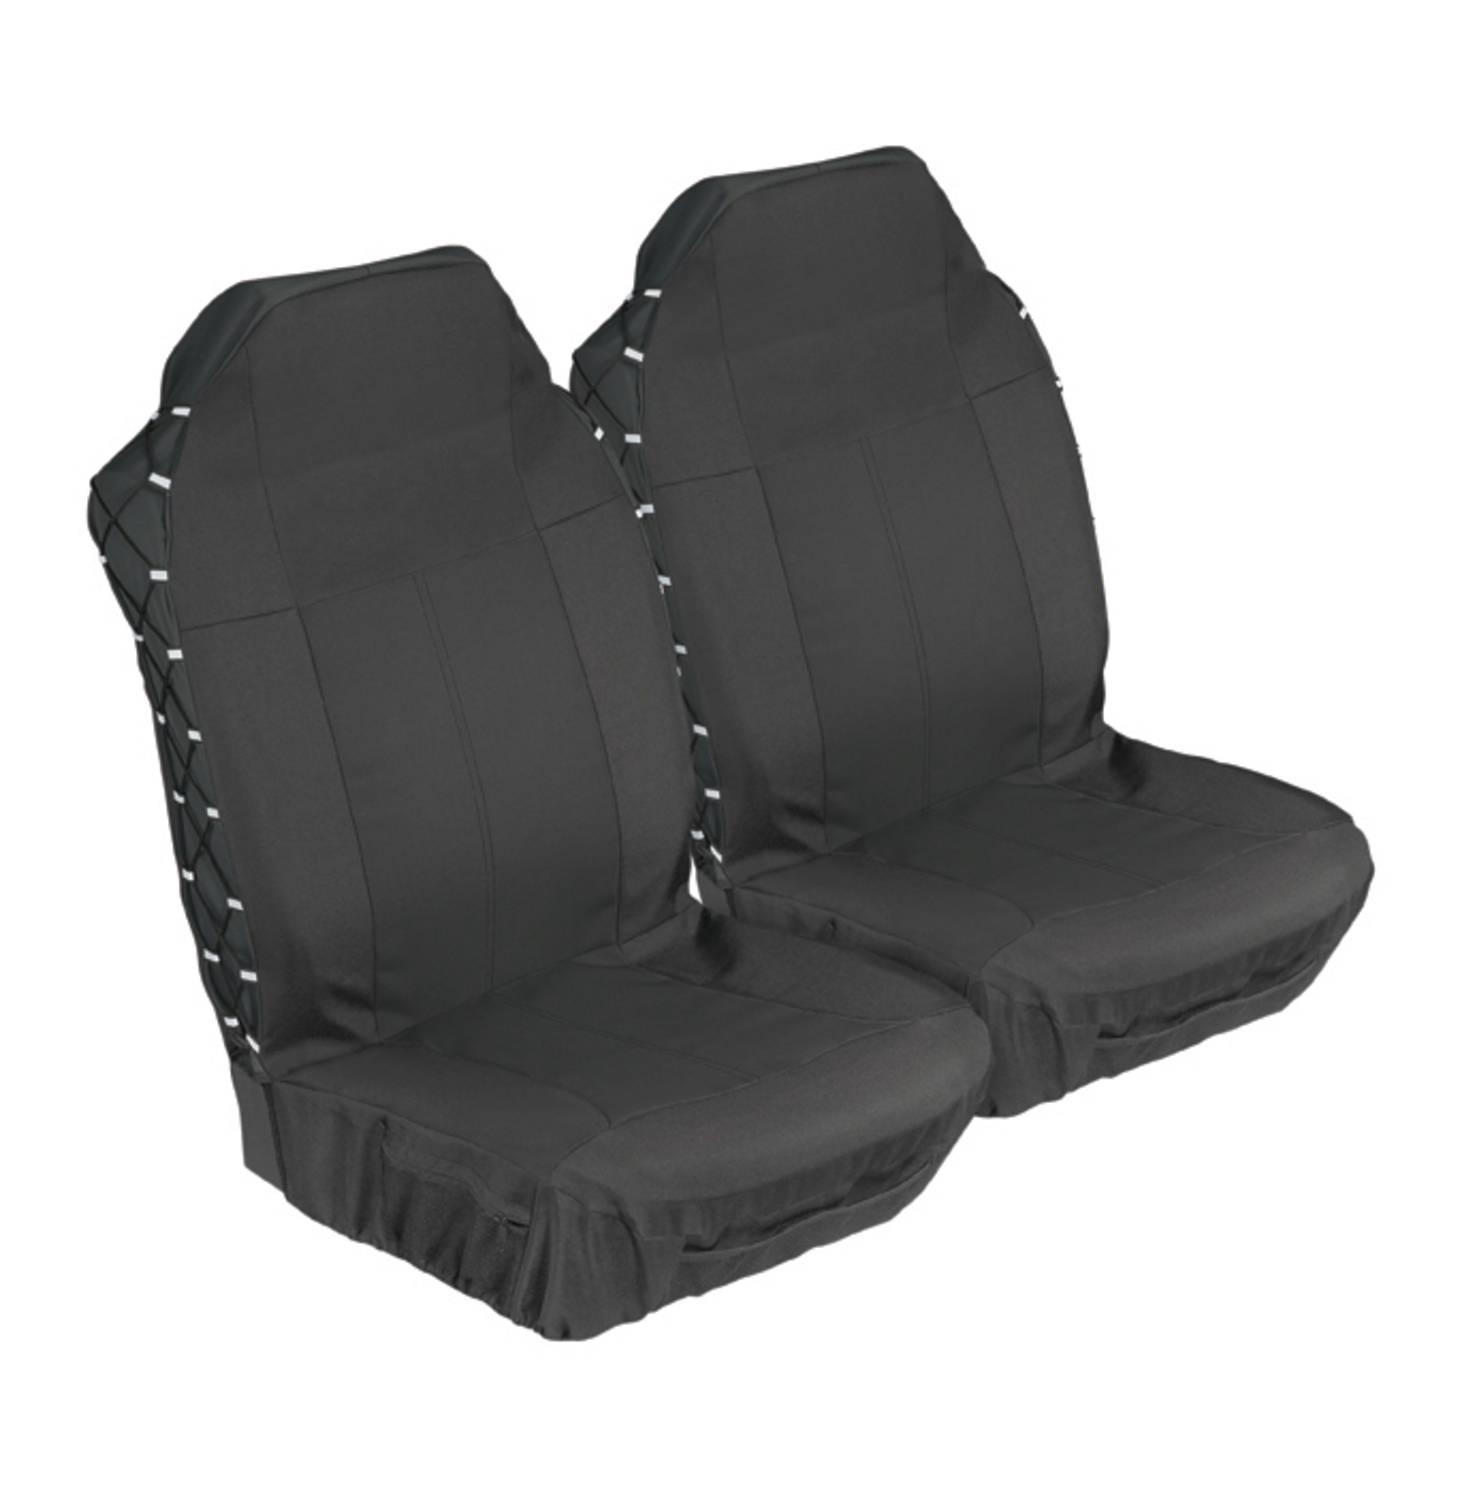 Stingray Explorer Front Seat Cover Set (2 Piece) - Black